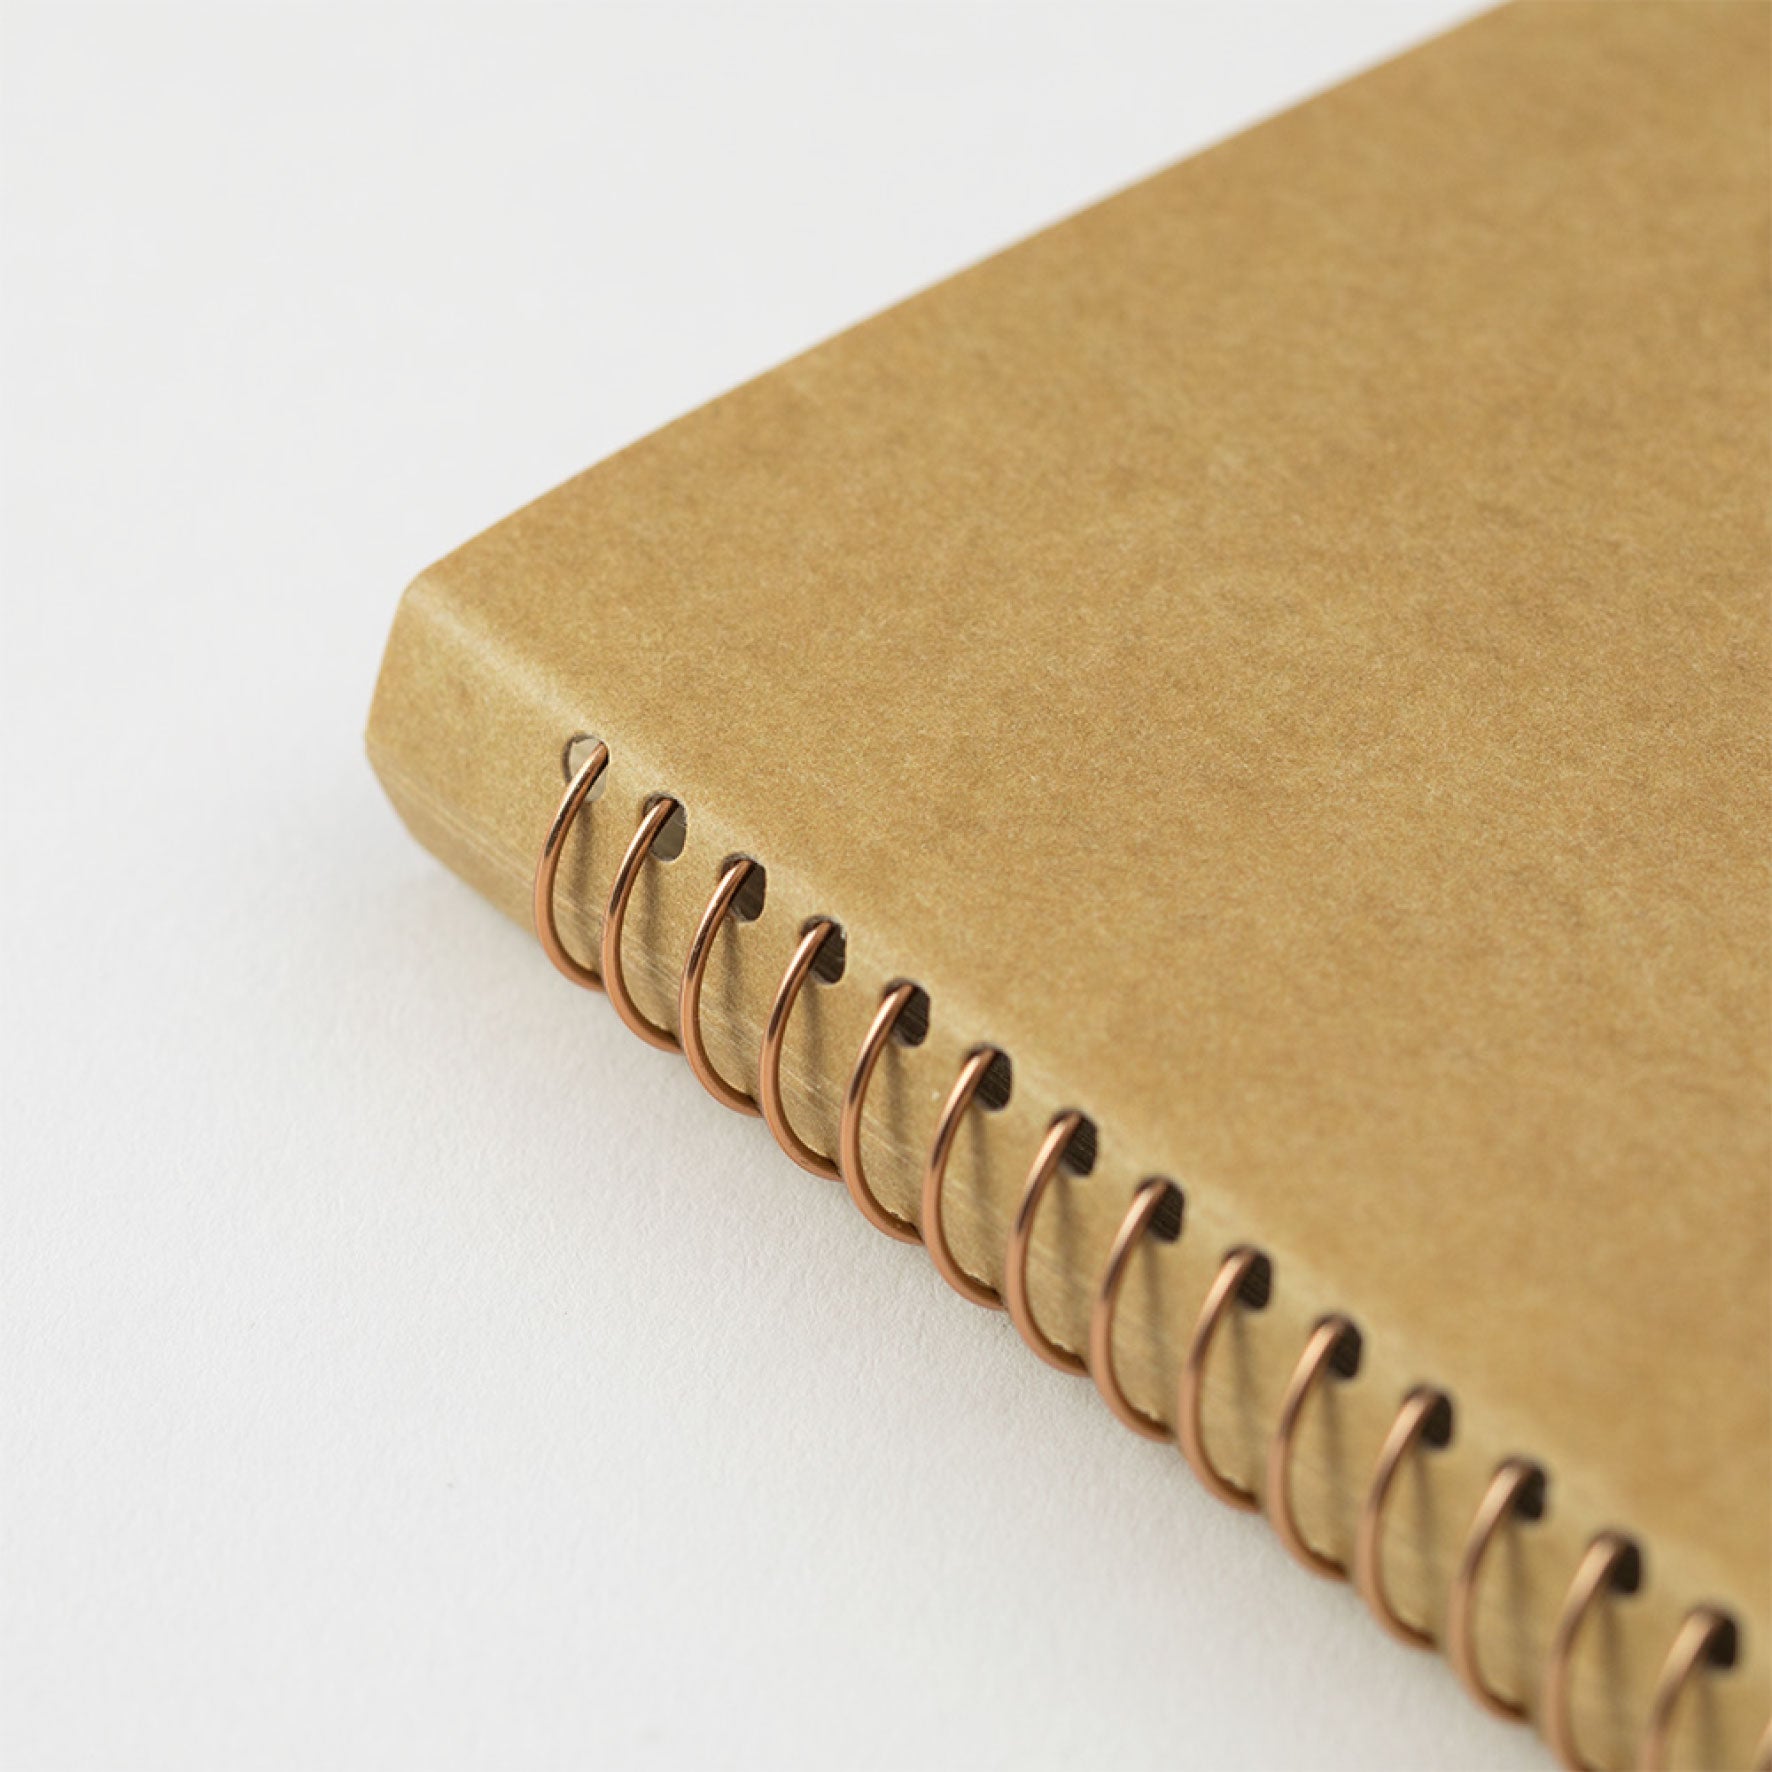 Midori - Notebook - Spiral Ring - B6 - DW Kraft Paper